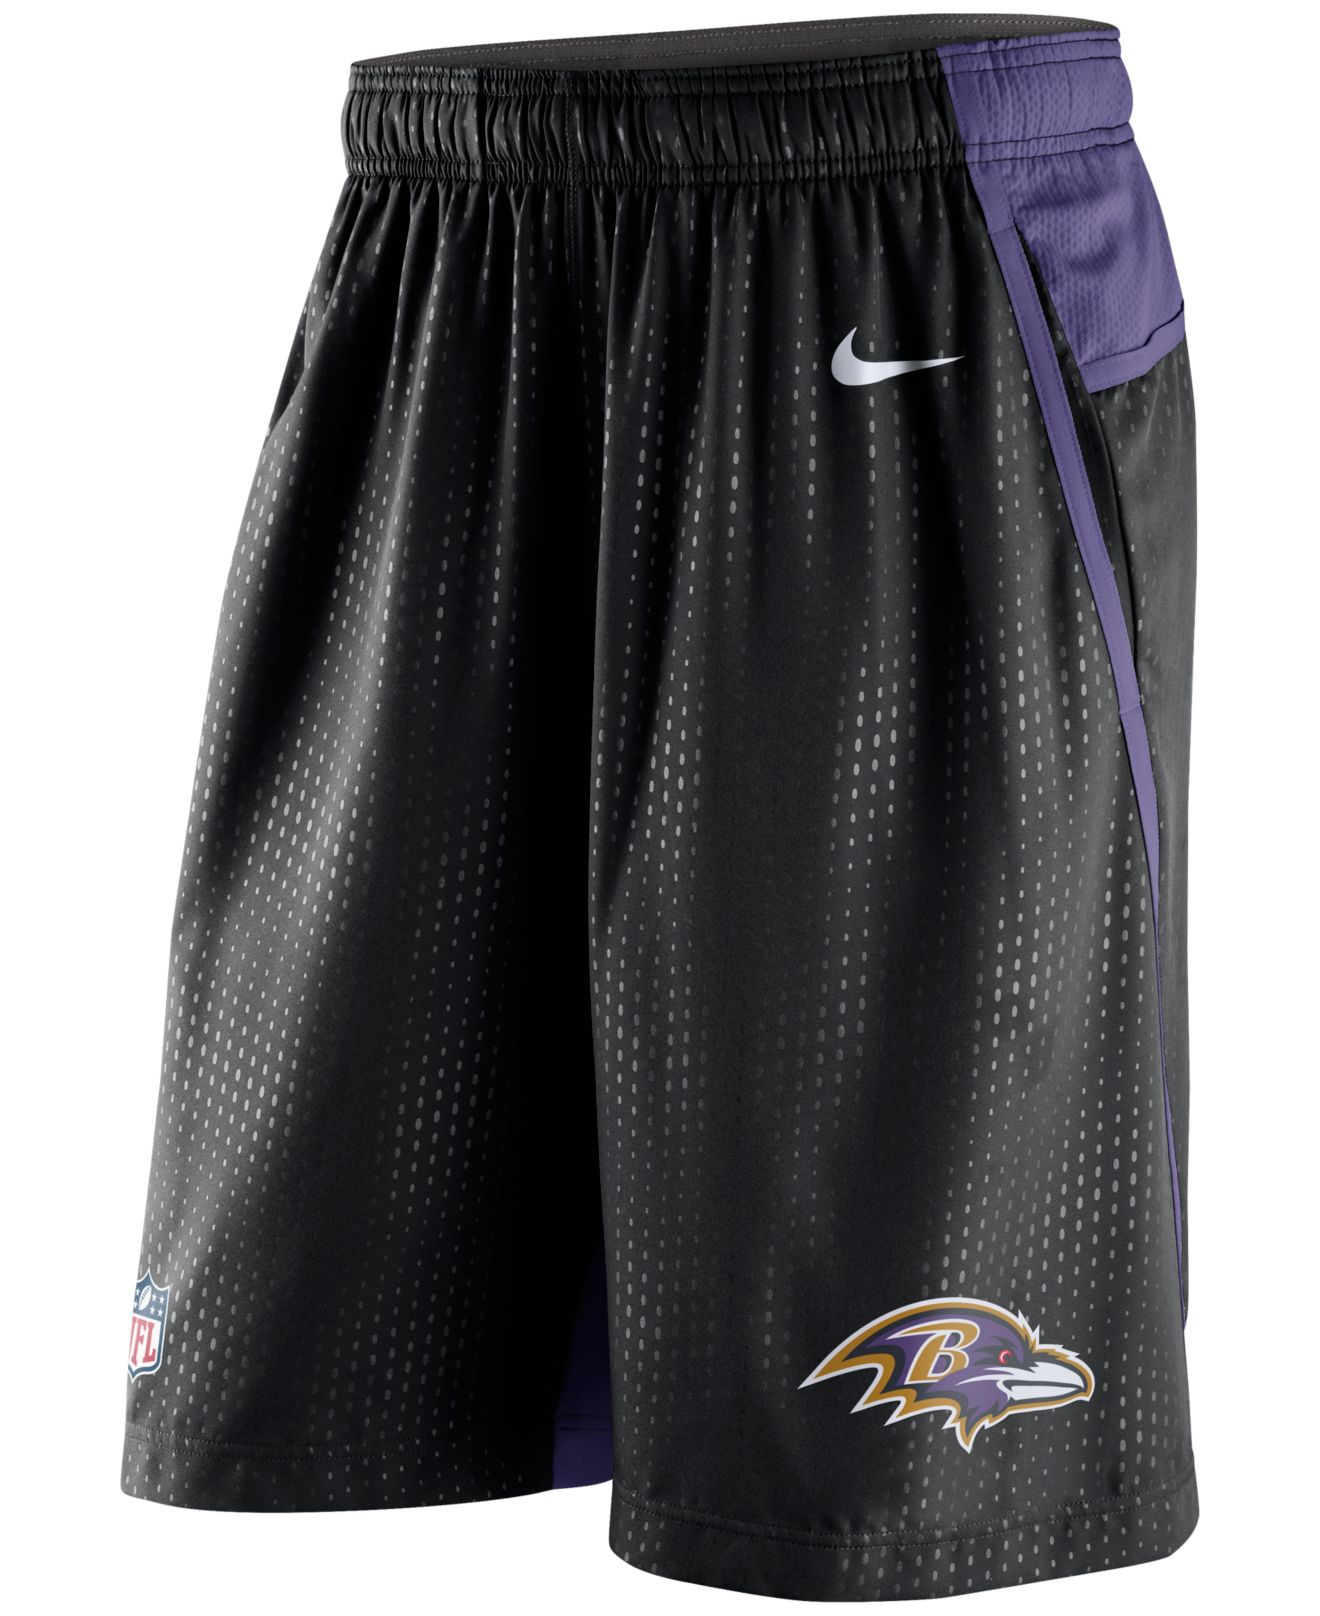 Nike Men's Baltimore Ravens Dri-fit Fly Xl 3.0 Shorts in Black/Purple ...